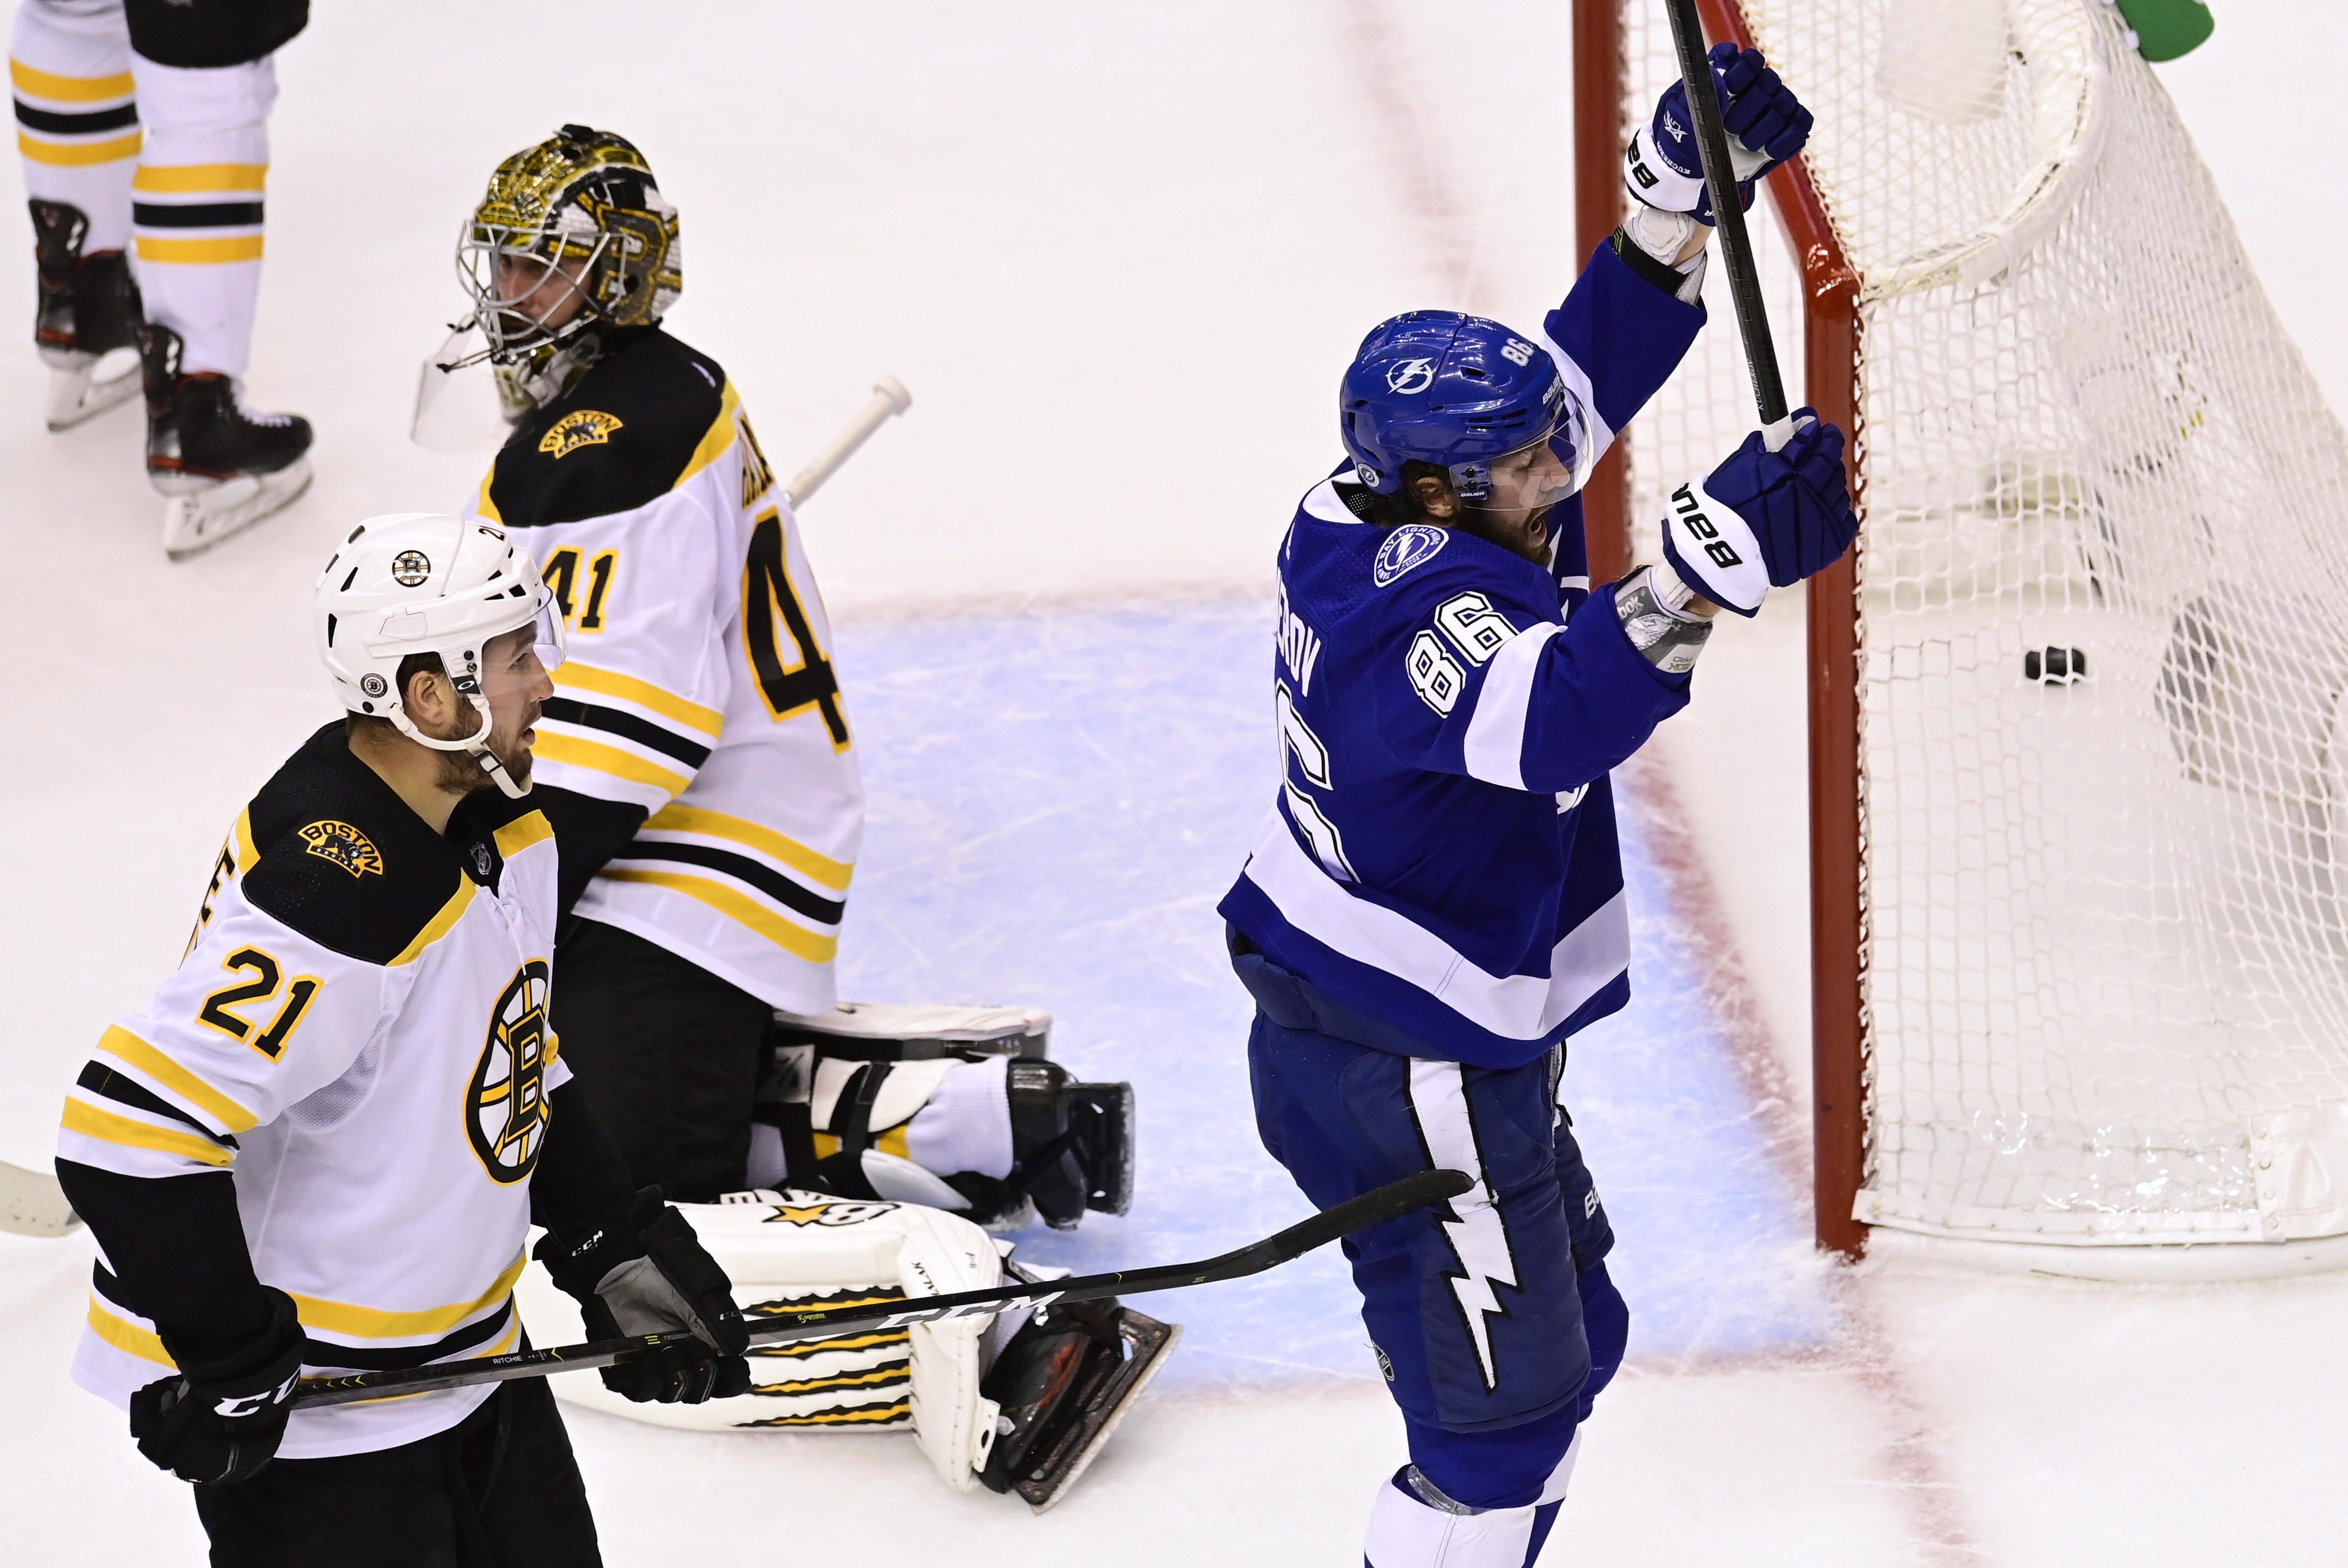 Coyle's OT goal lifts Bruins past Lightning 2-1